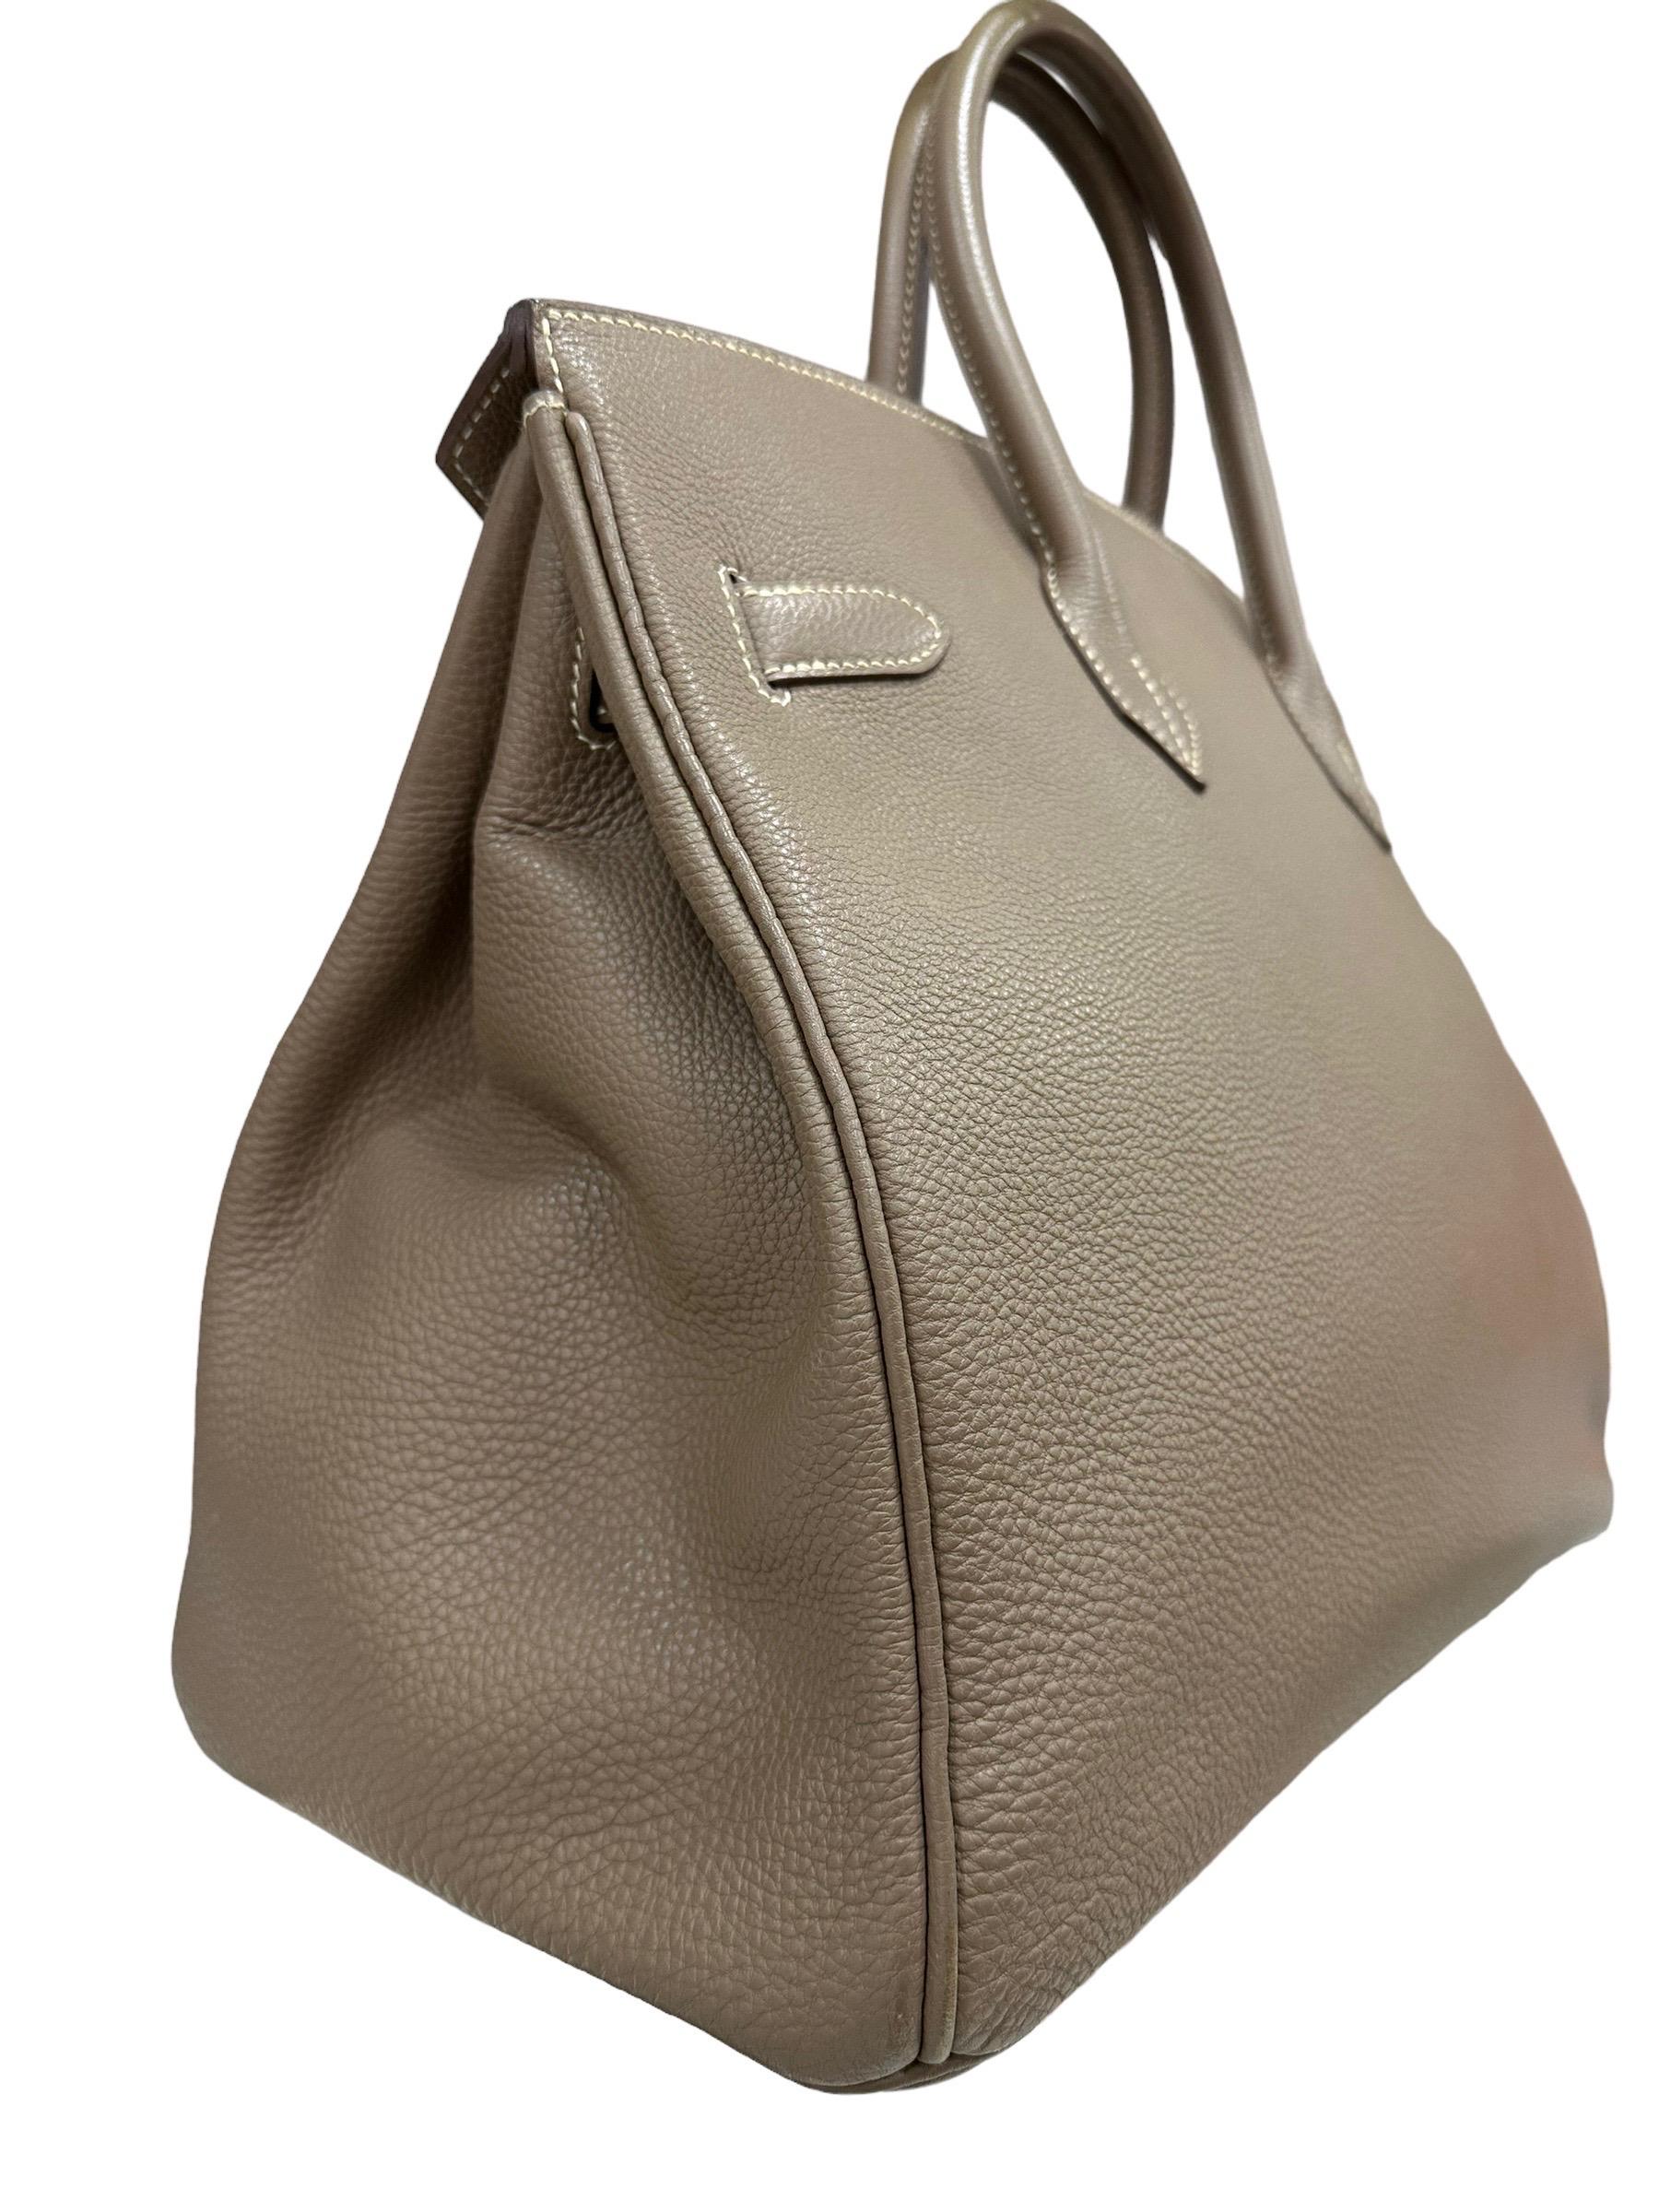 2008 Hermès Birkin 35 Togo Leather Toundra Top Handle Bag en vente 1